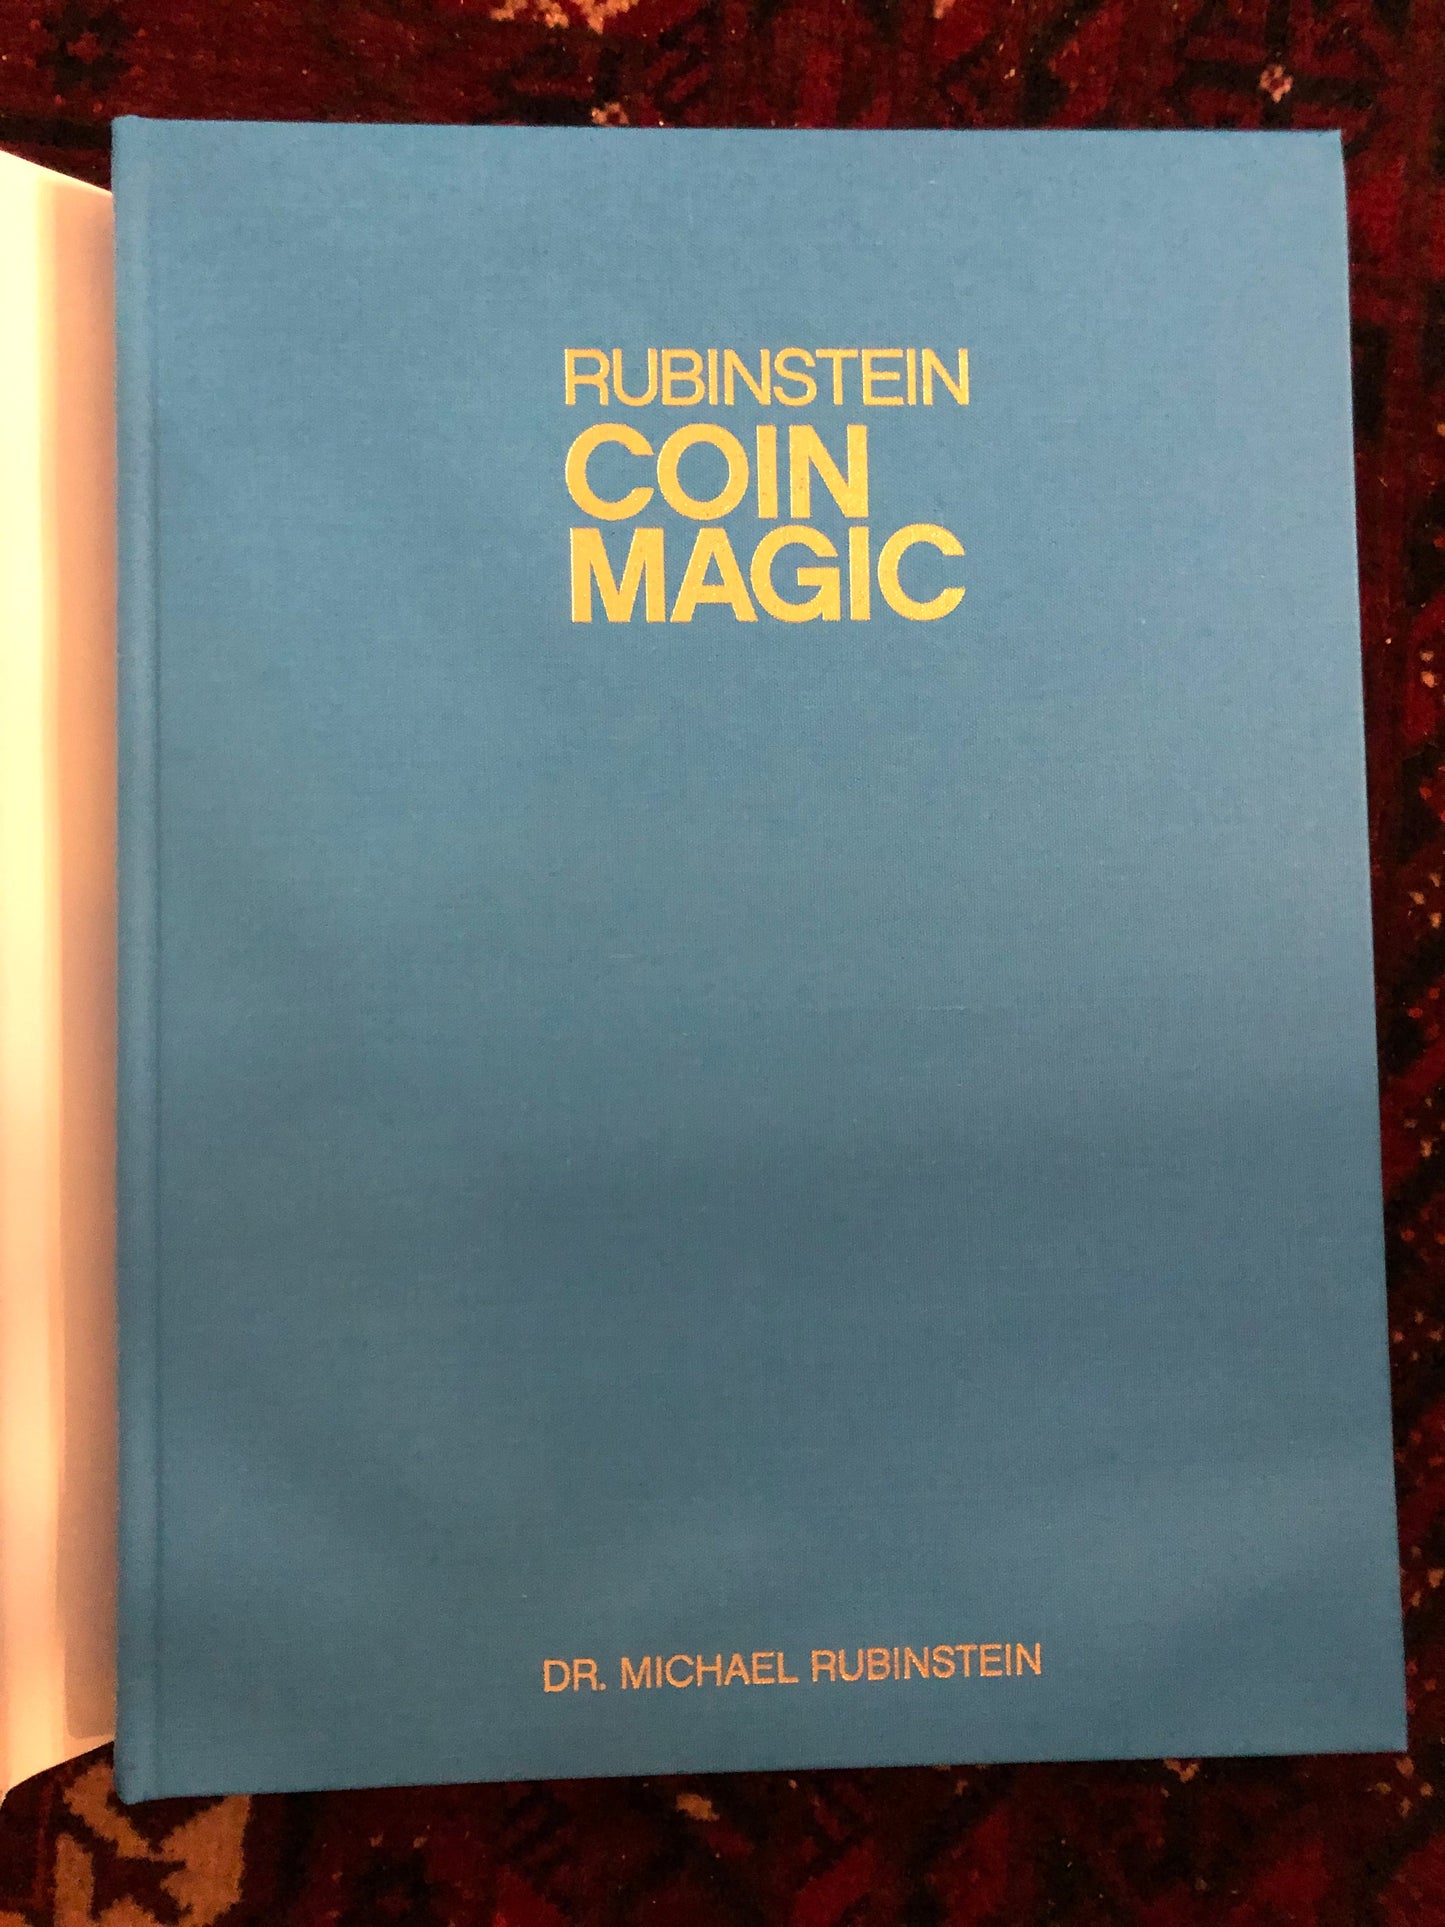 Rubinstein Coin Magic - Michael Rubinstein (SIGNED)